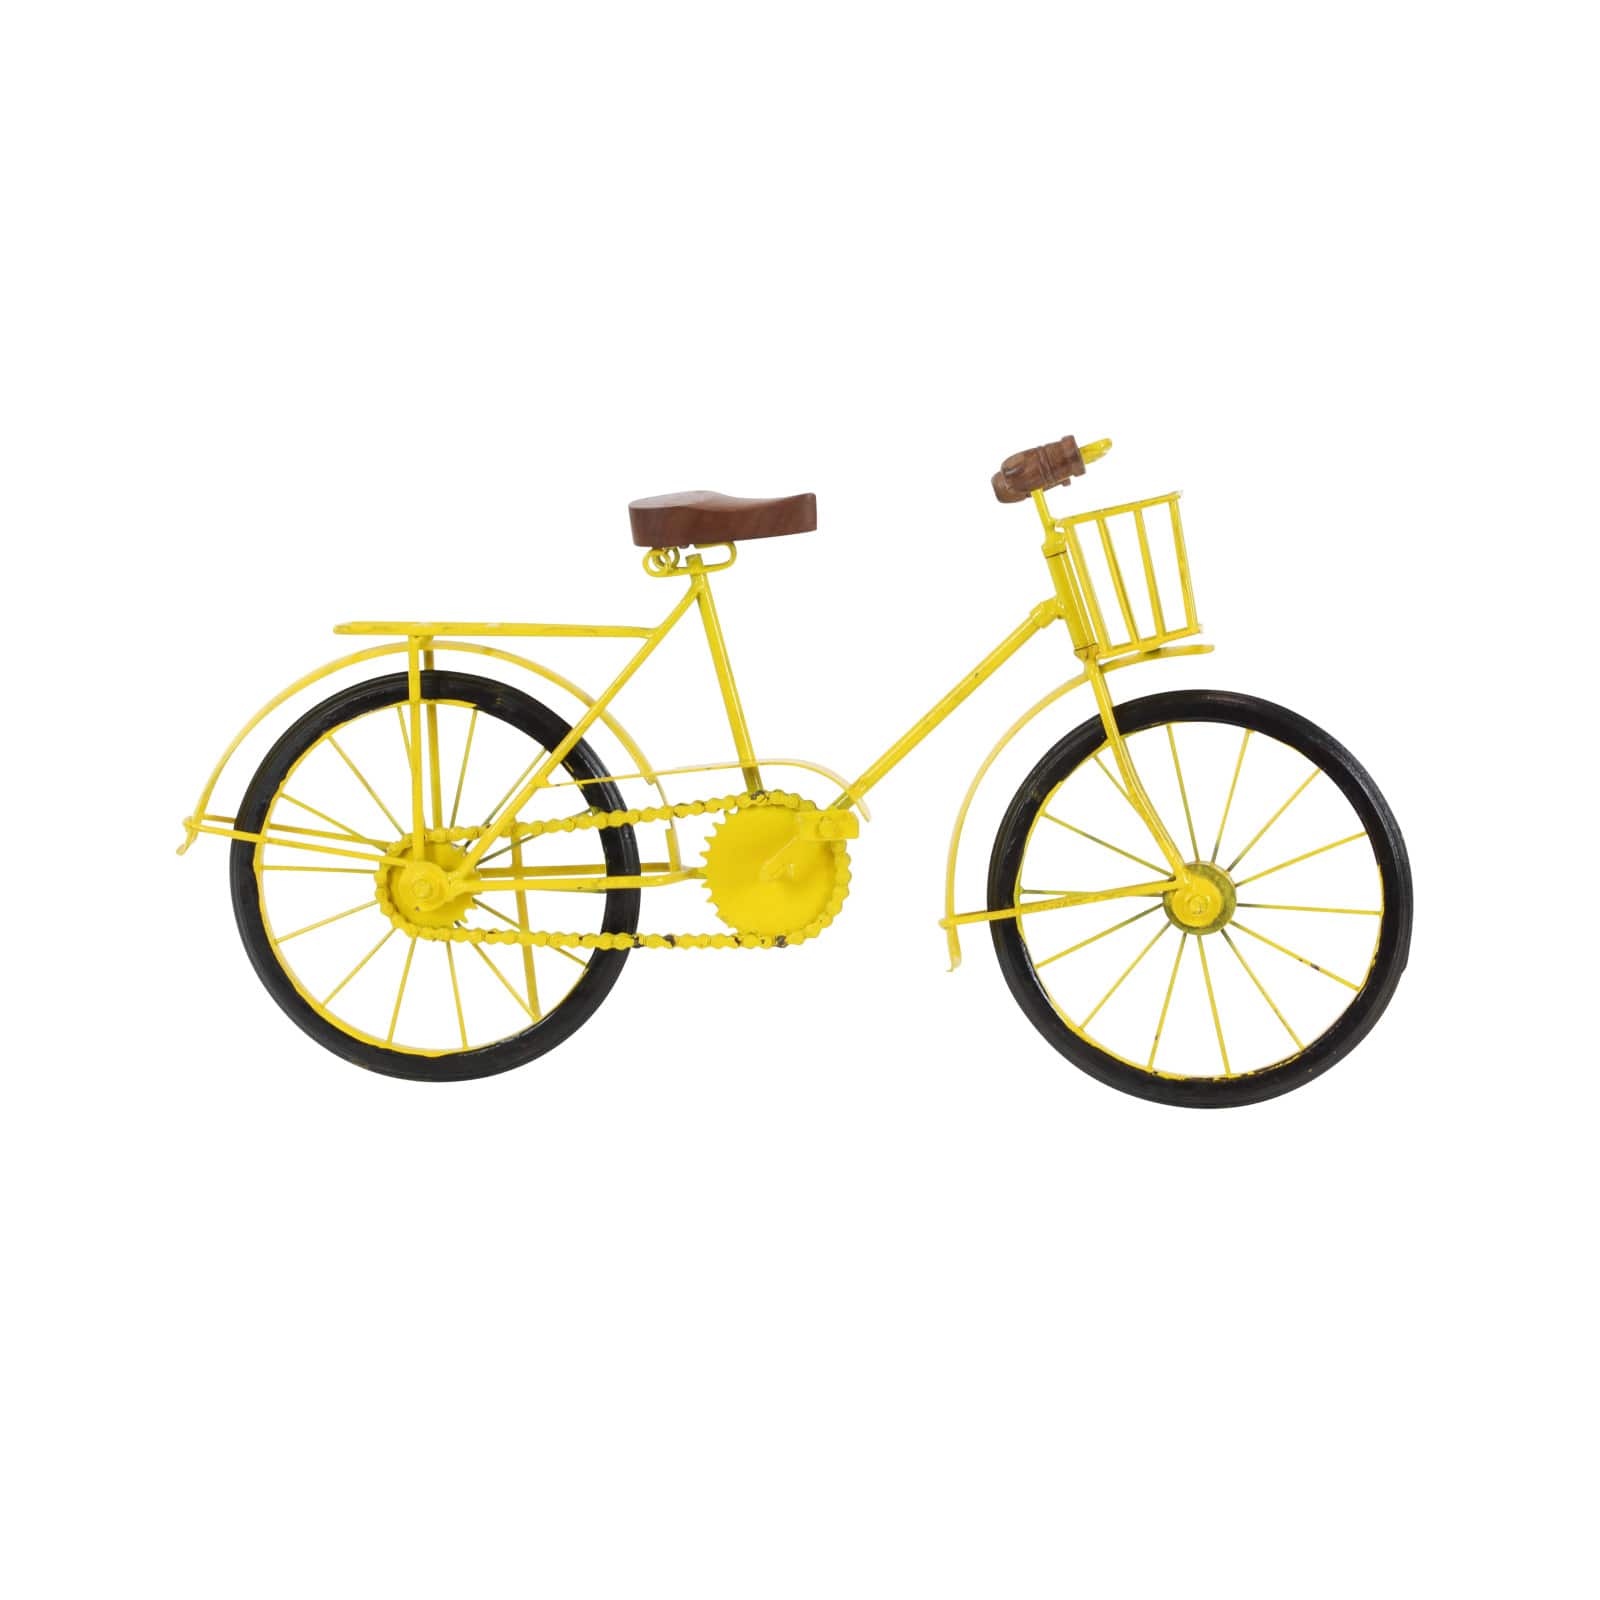 Vintage Iron Bike Model Handicraft Yellow Bicycle Desktop Decoration 